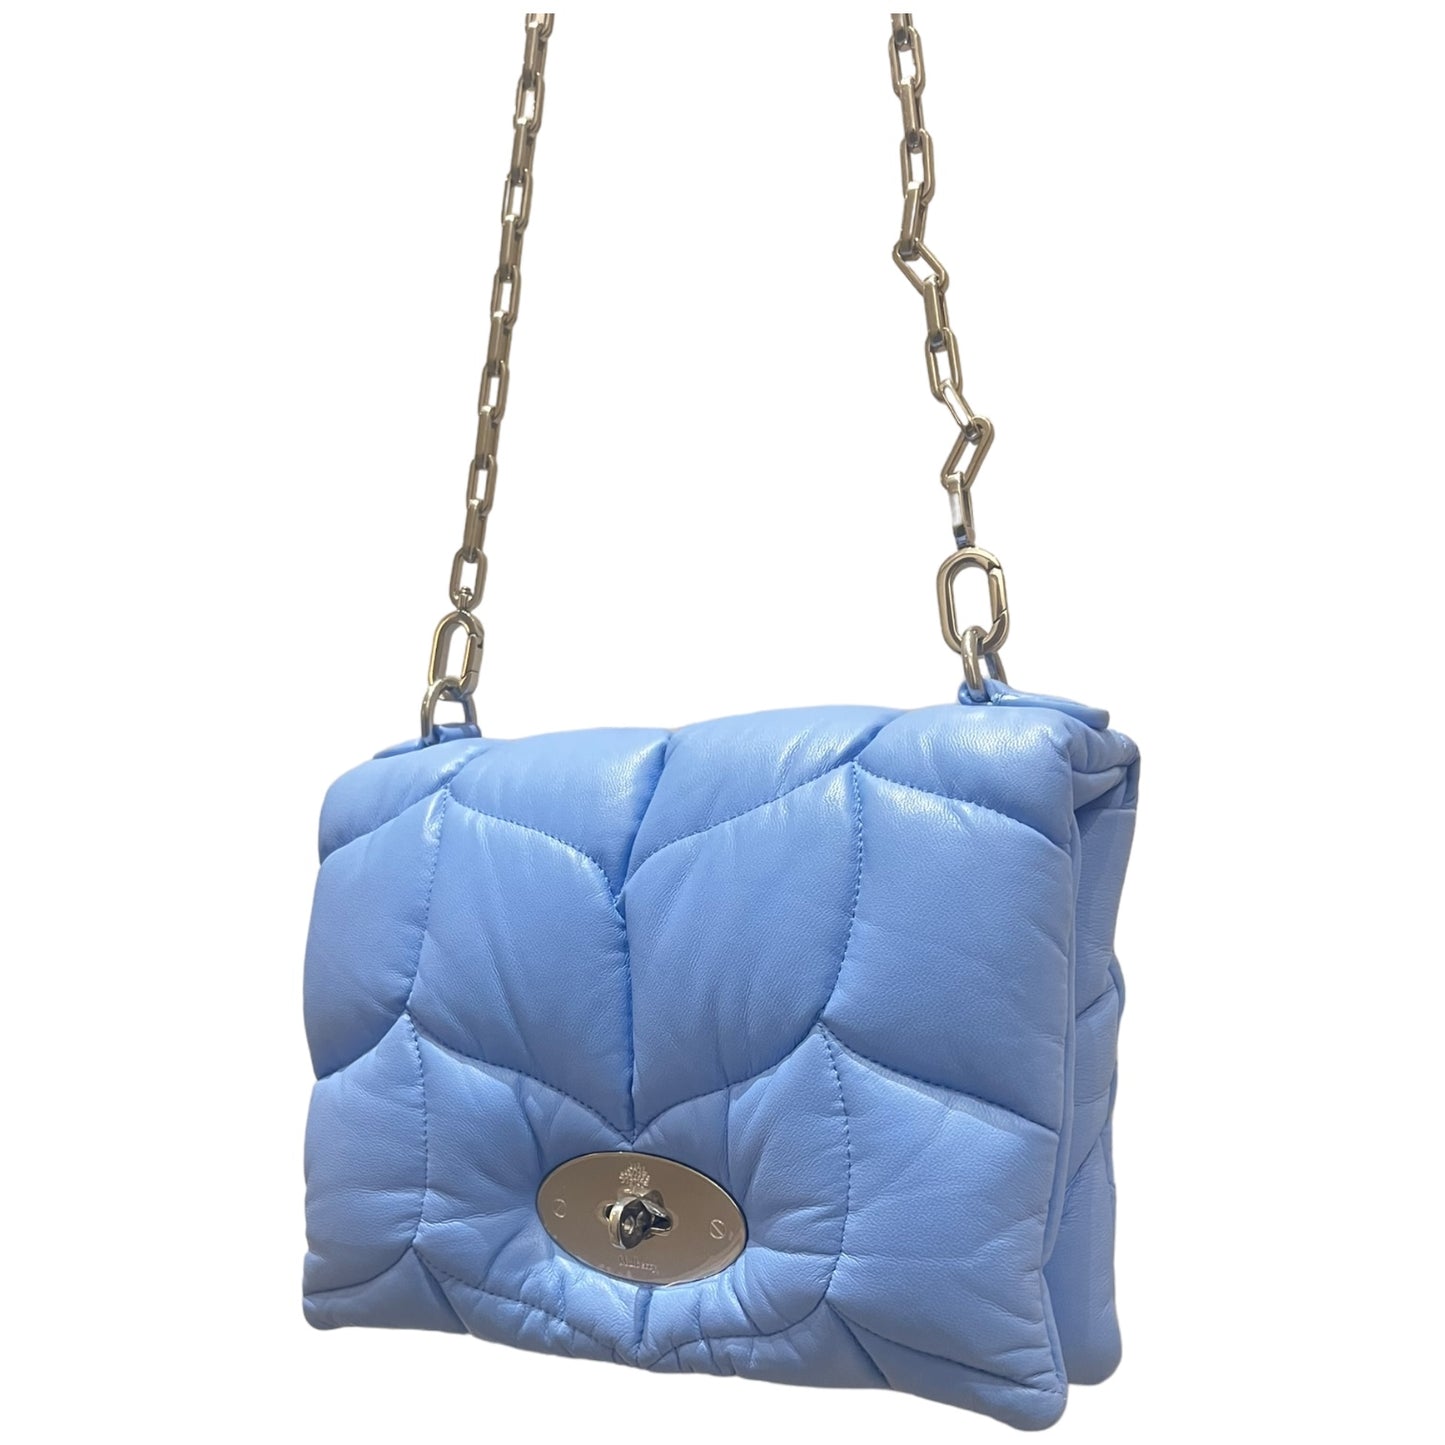 Mulberry Little Softie Blue Bag - NEW